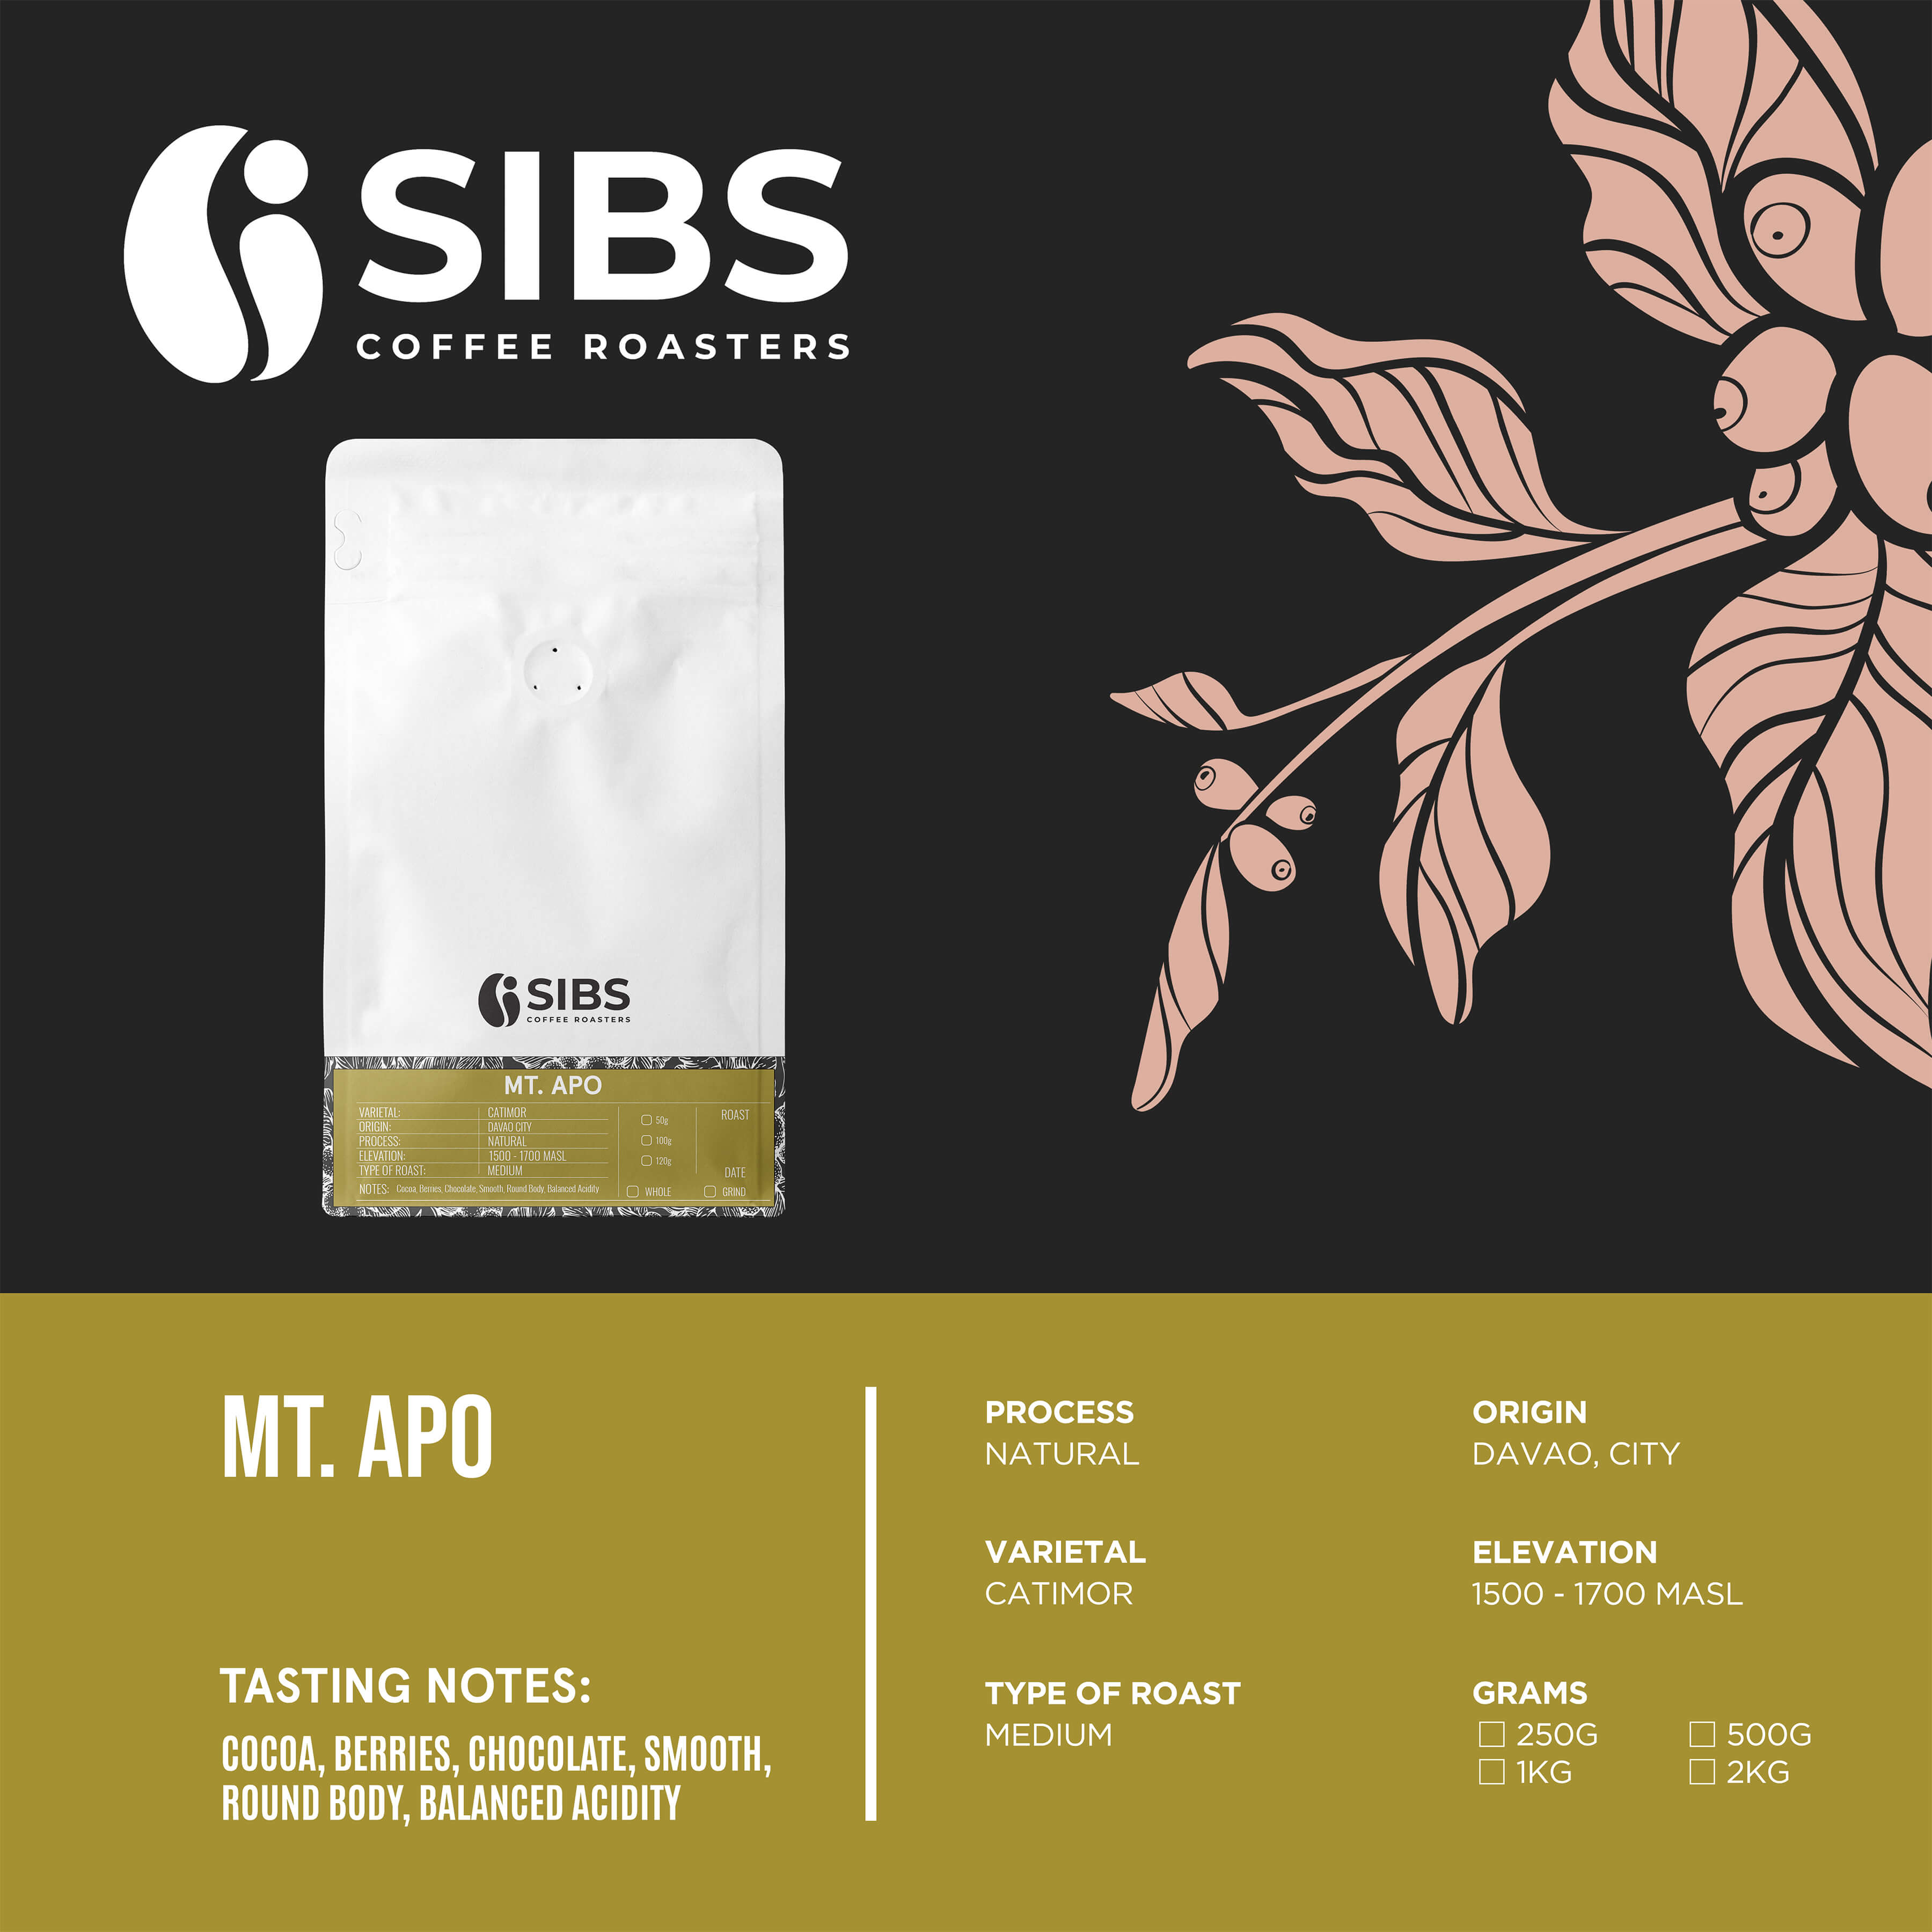 Mt. Apo (100% Arabica) - Freshly Roasted Coffee